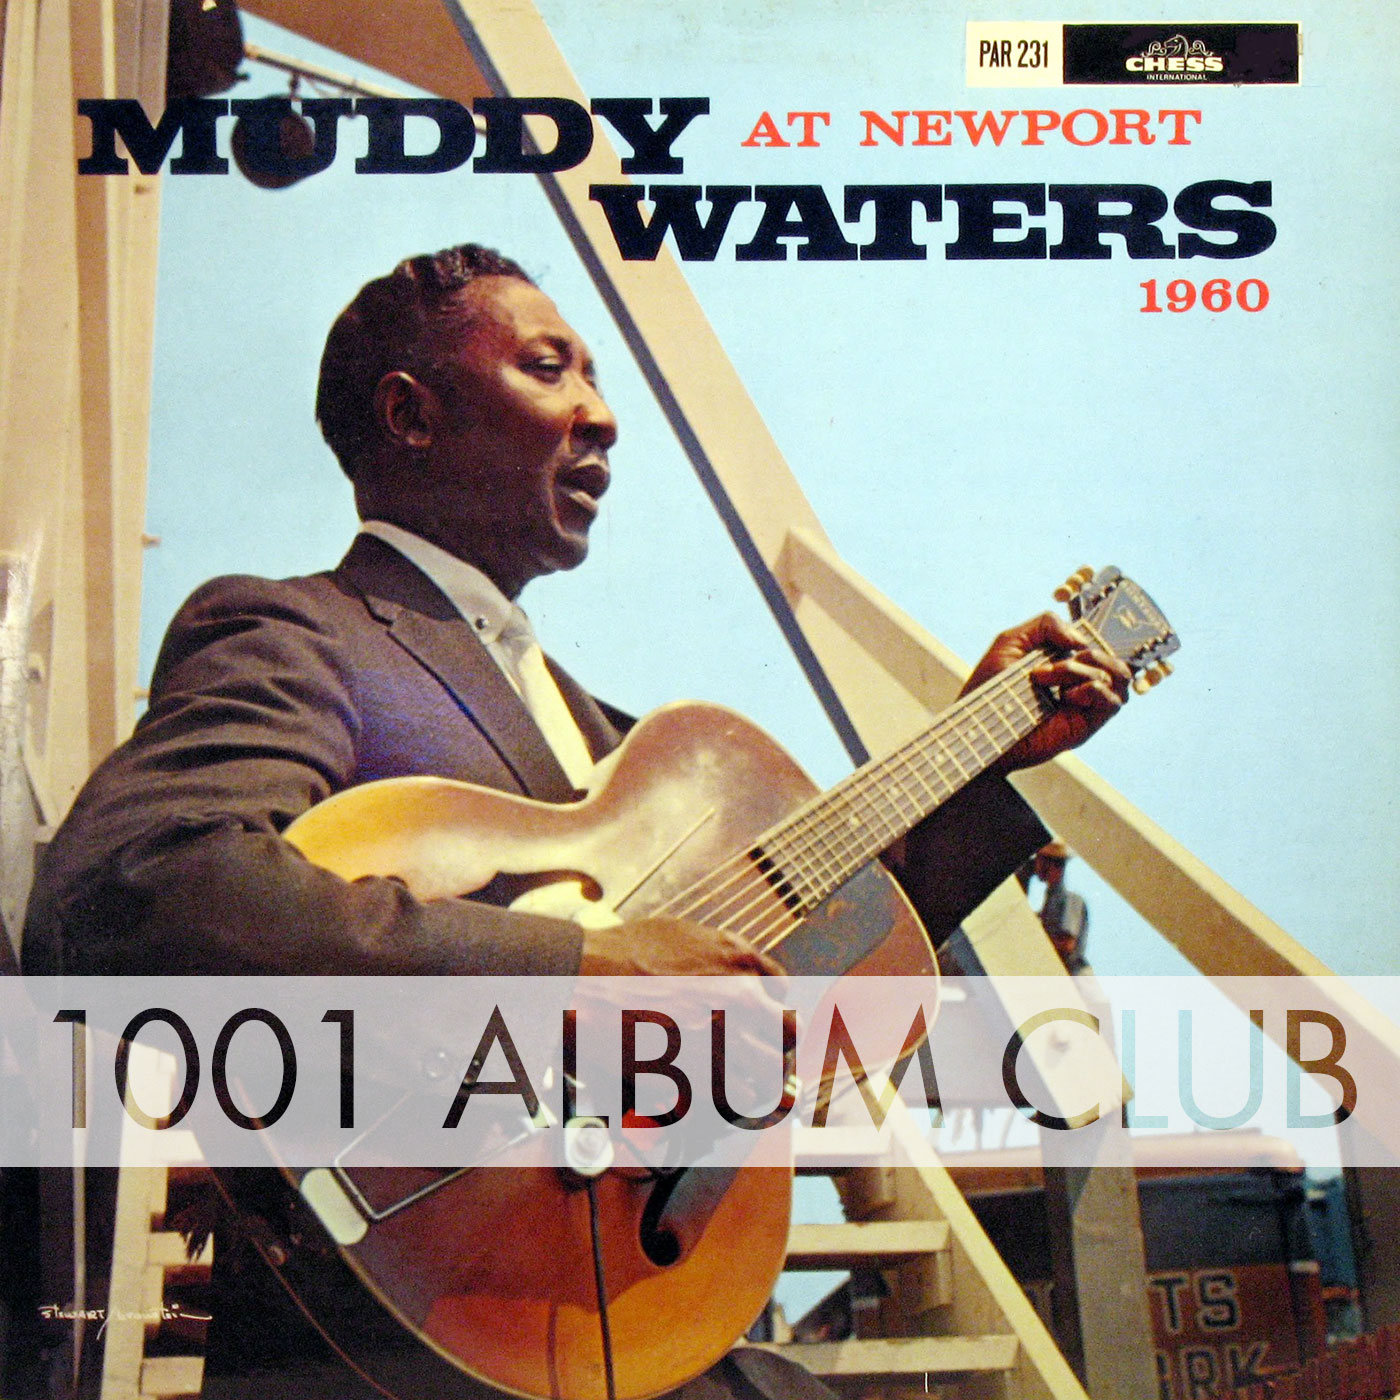 029 Muddy Waters – At Newport 1960 – 1001 Album Club